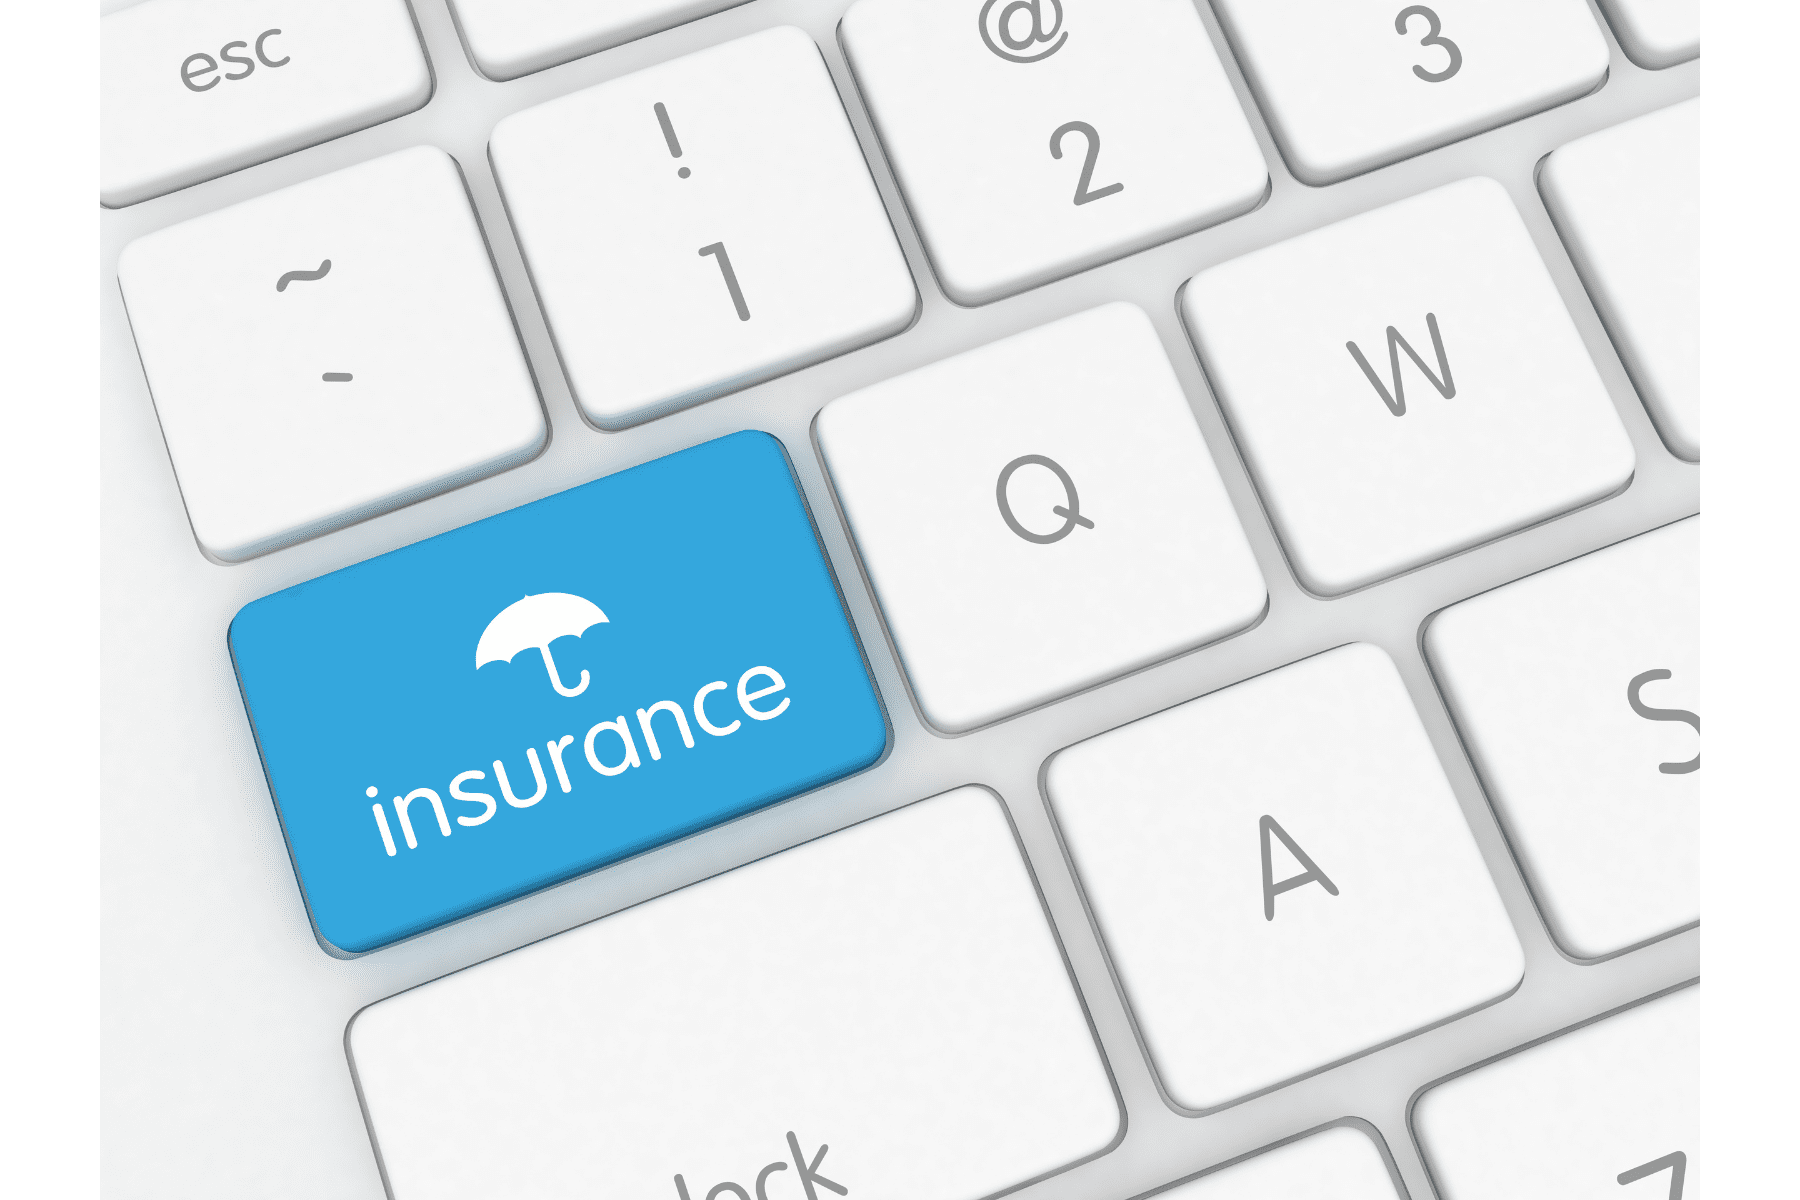 insurance essentials key on keyboard